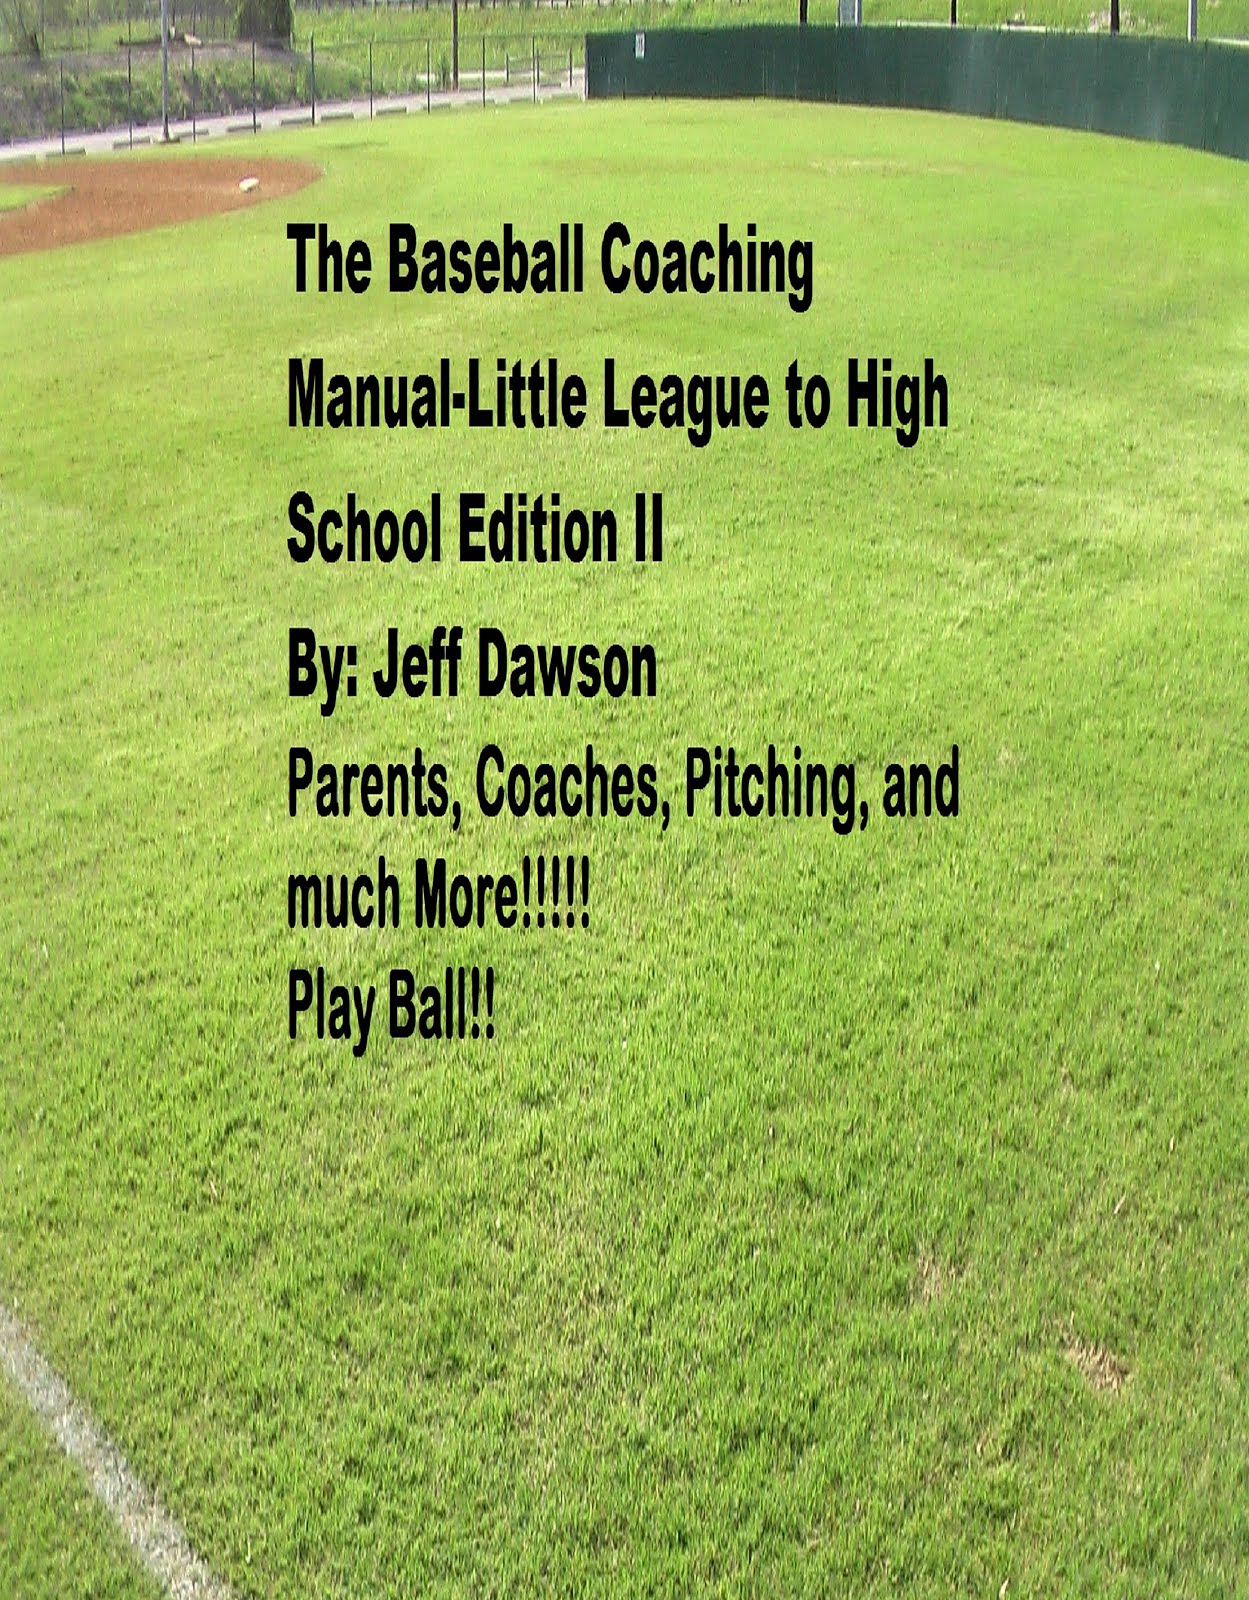 The Baseball Coaching Manual